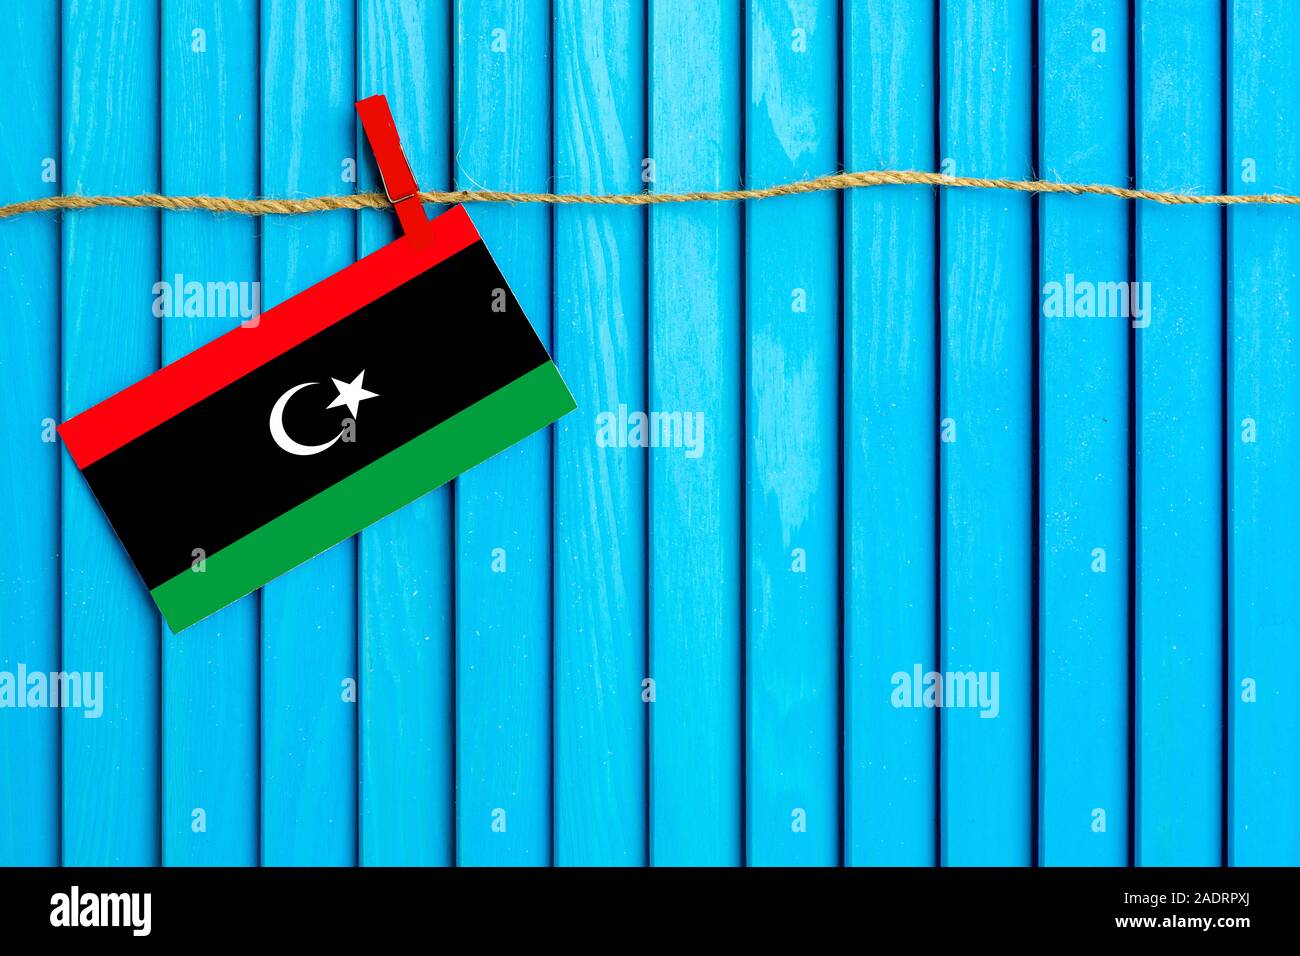 Libya People Stock Photos & Libya People Stock Images - Page 3 - Alamy